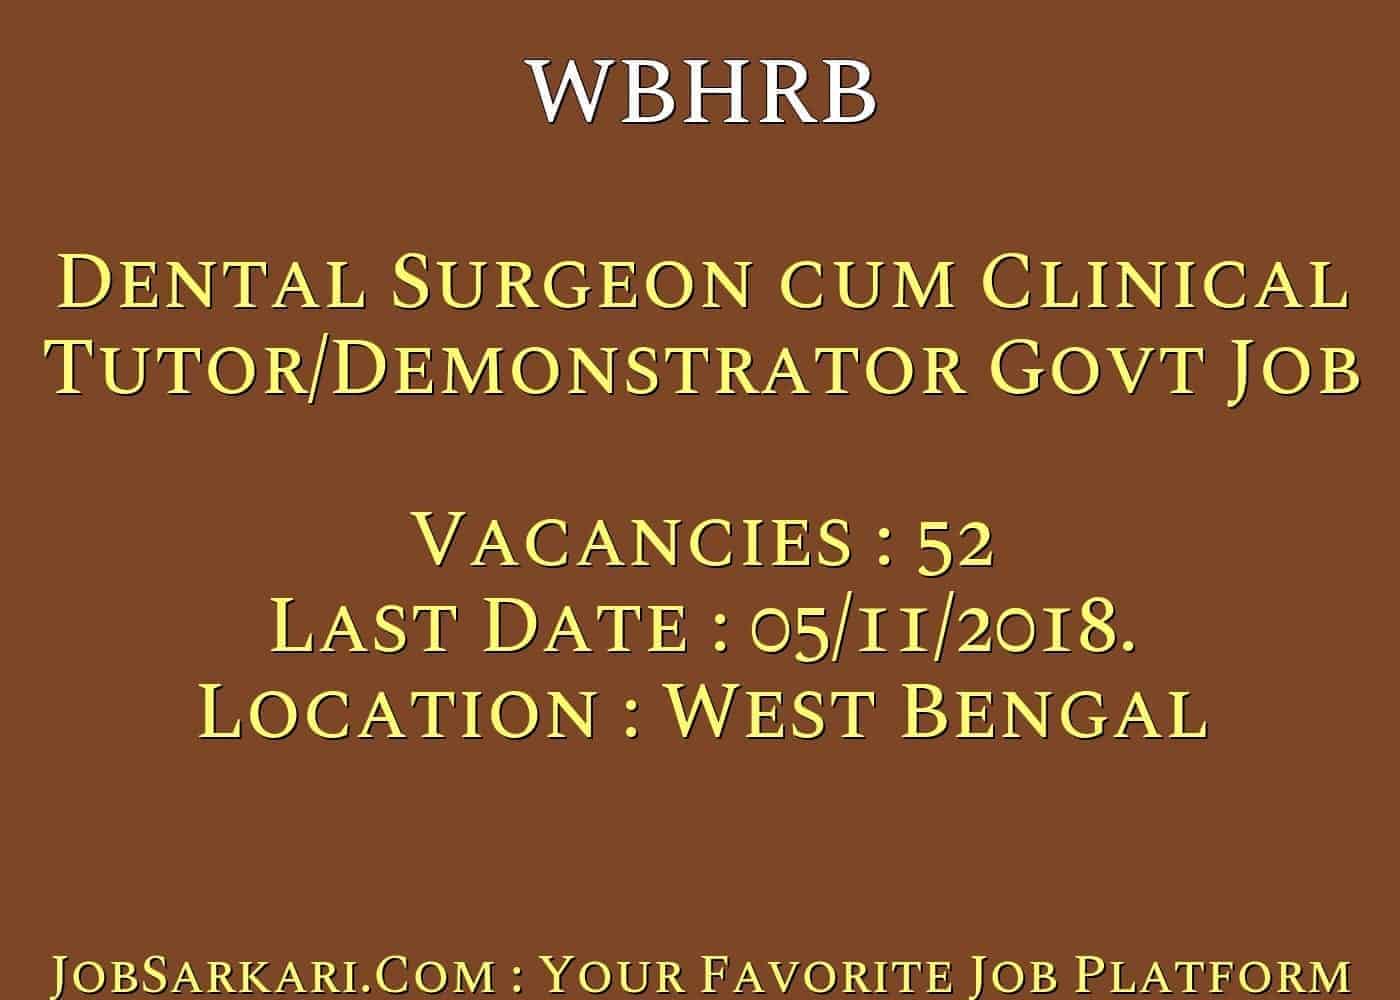 WBHRB Recruitment 2018 for Dental Surgeon cum Clinical Tutor/Demonstrator Govt Job